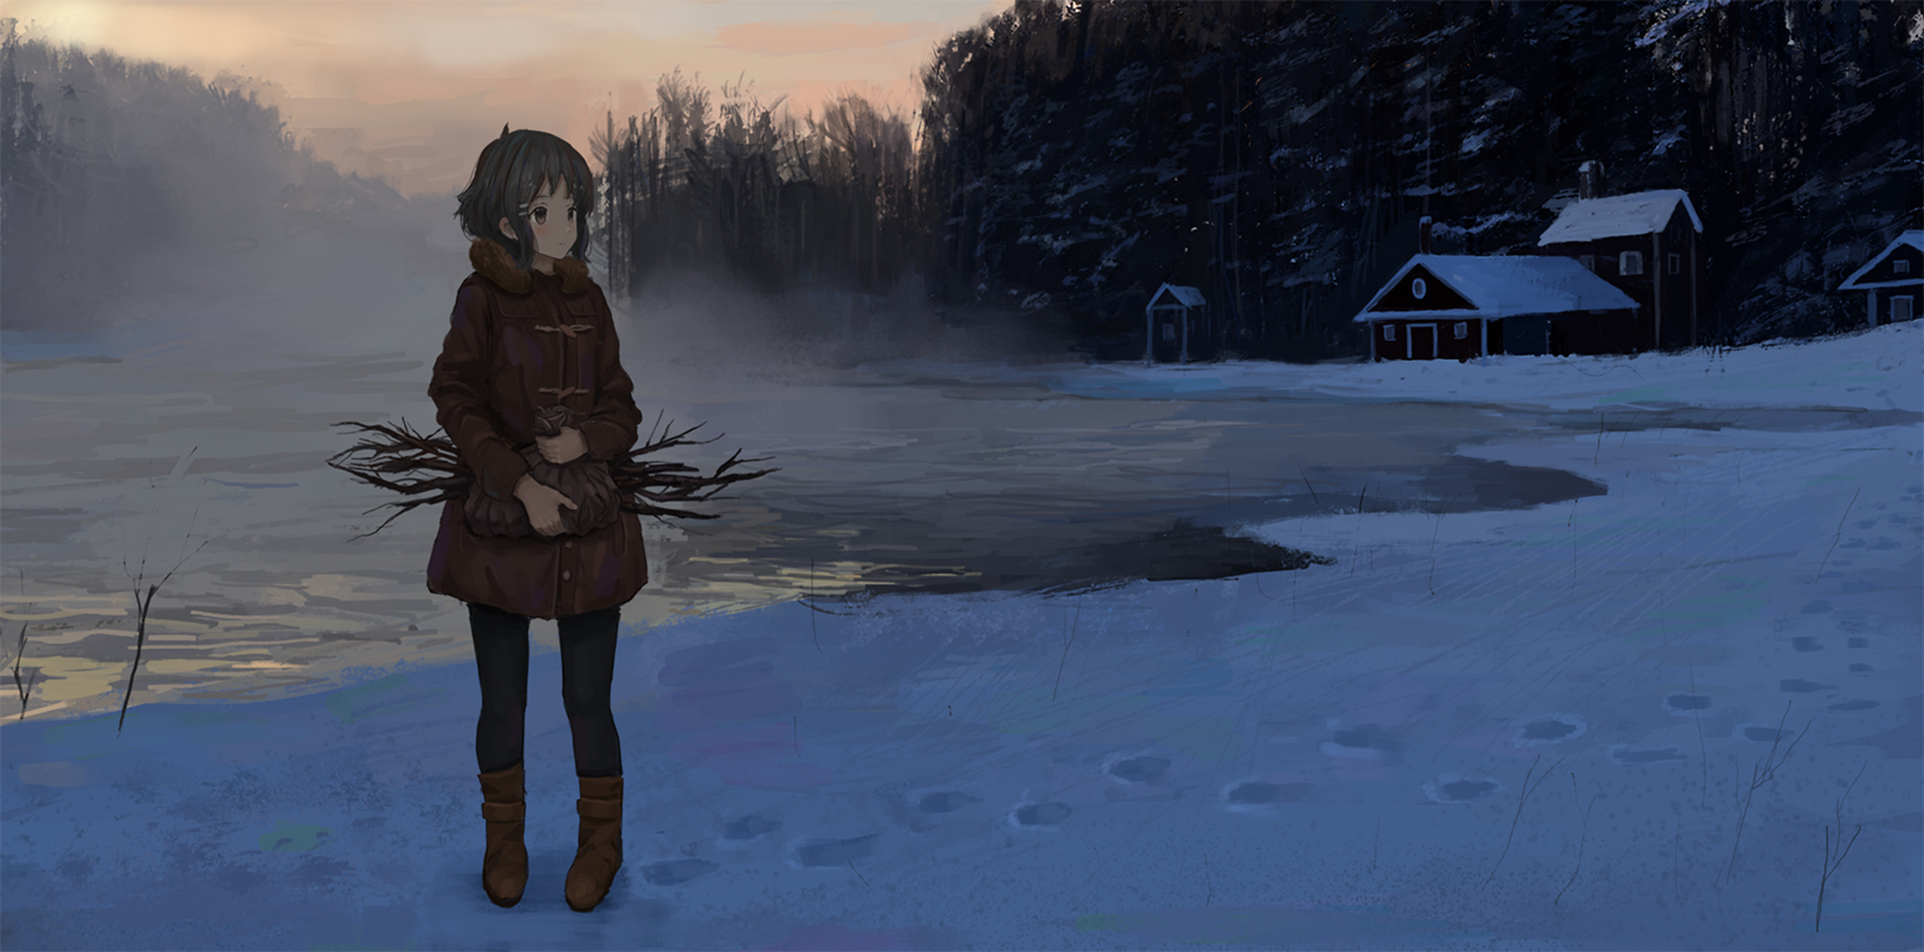 Anime Winter Art by ￦ANKE